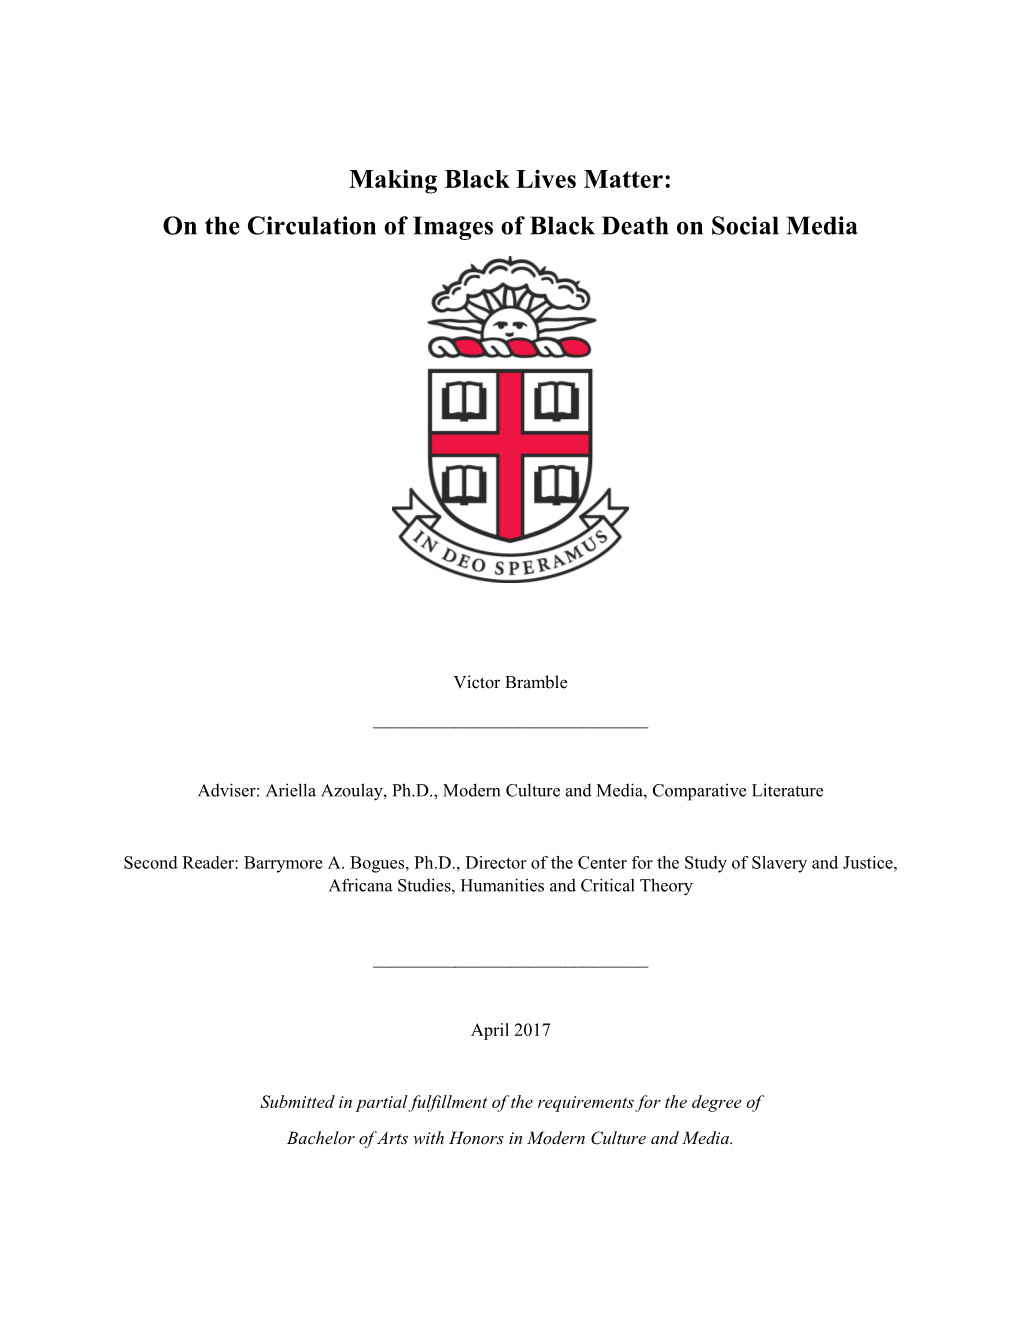 Making Black Lives Matter: on the Circulation of Images of Black Death on Social Media